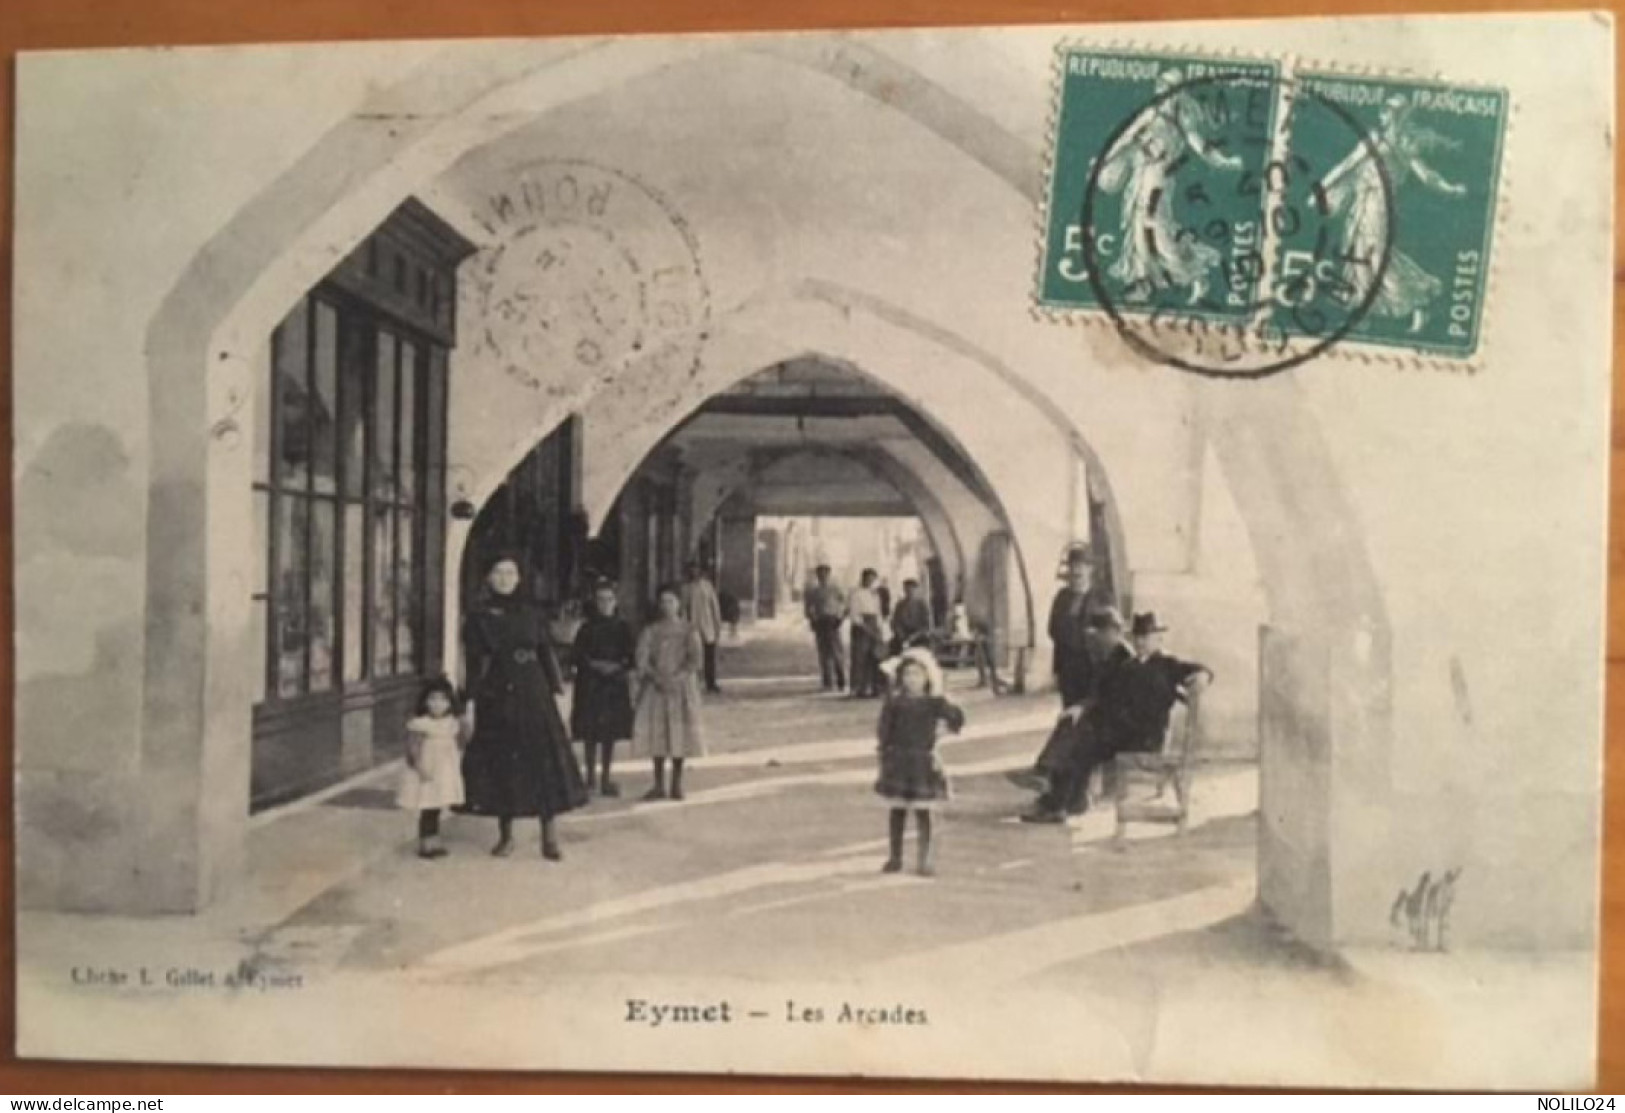 Cpa 24 Eymet, Les Arcades, Animée, éd Gillet, écrite En 1910 - Eymet